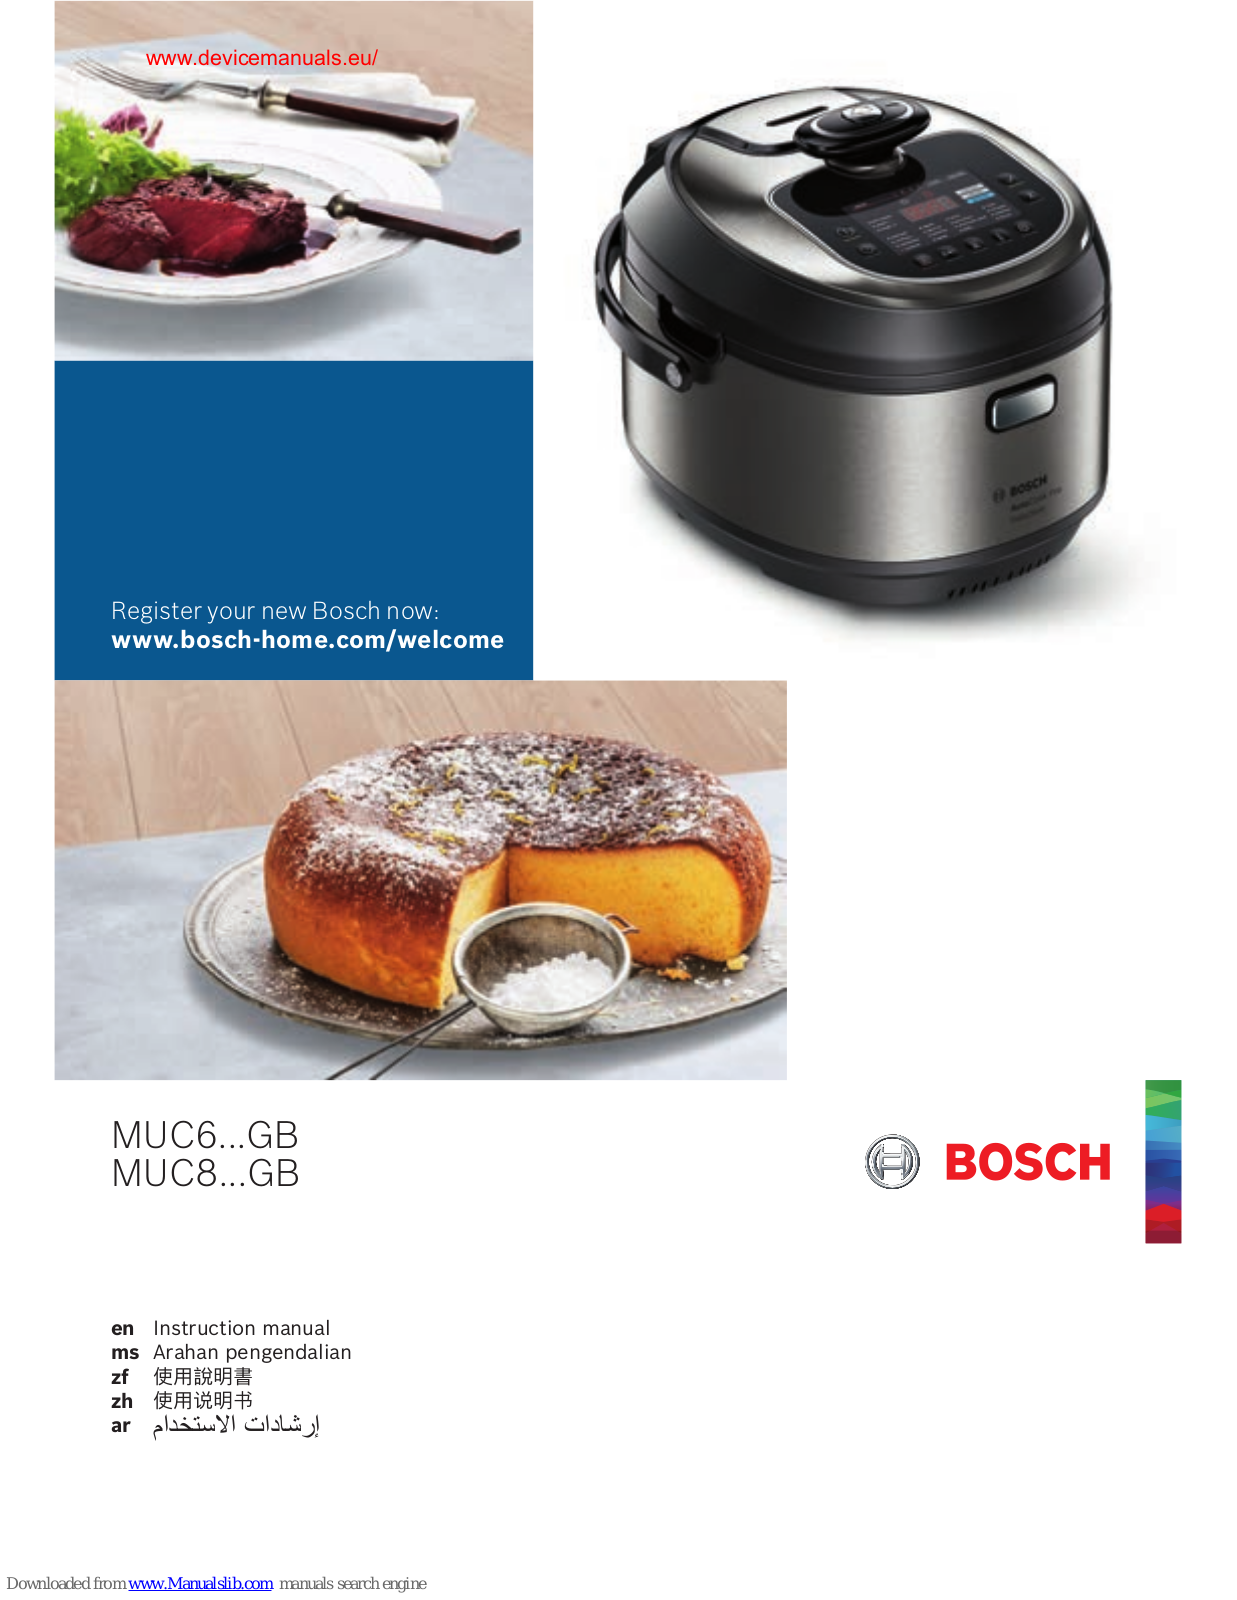 Bosch MUC68, MUC88 Instruction Manual